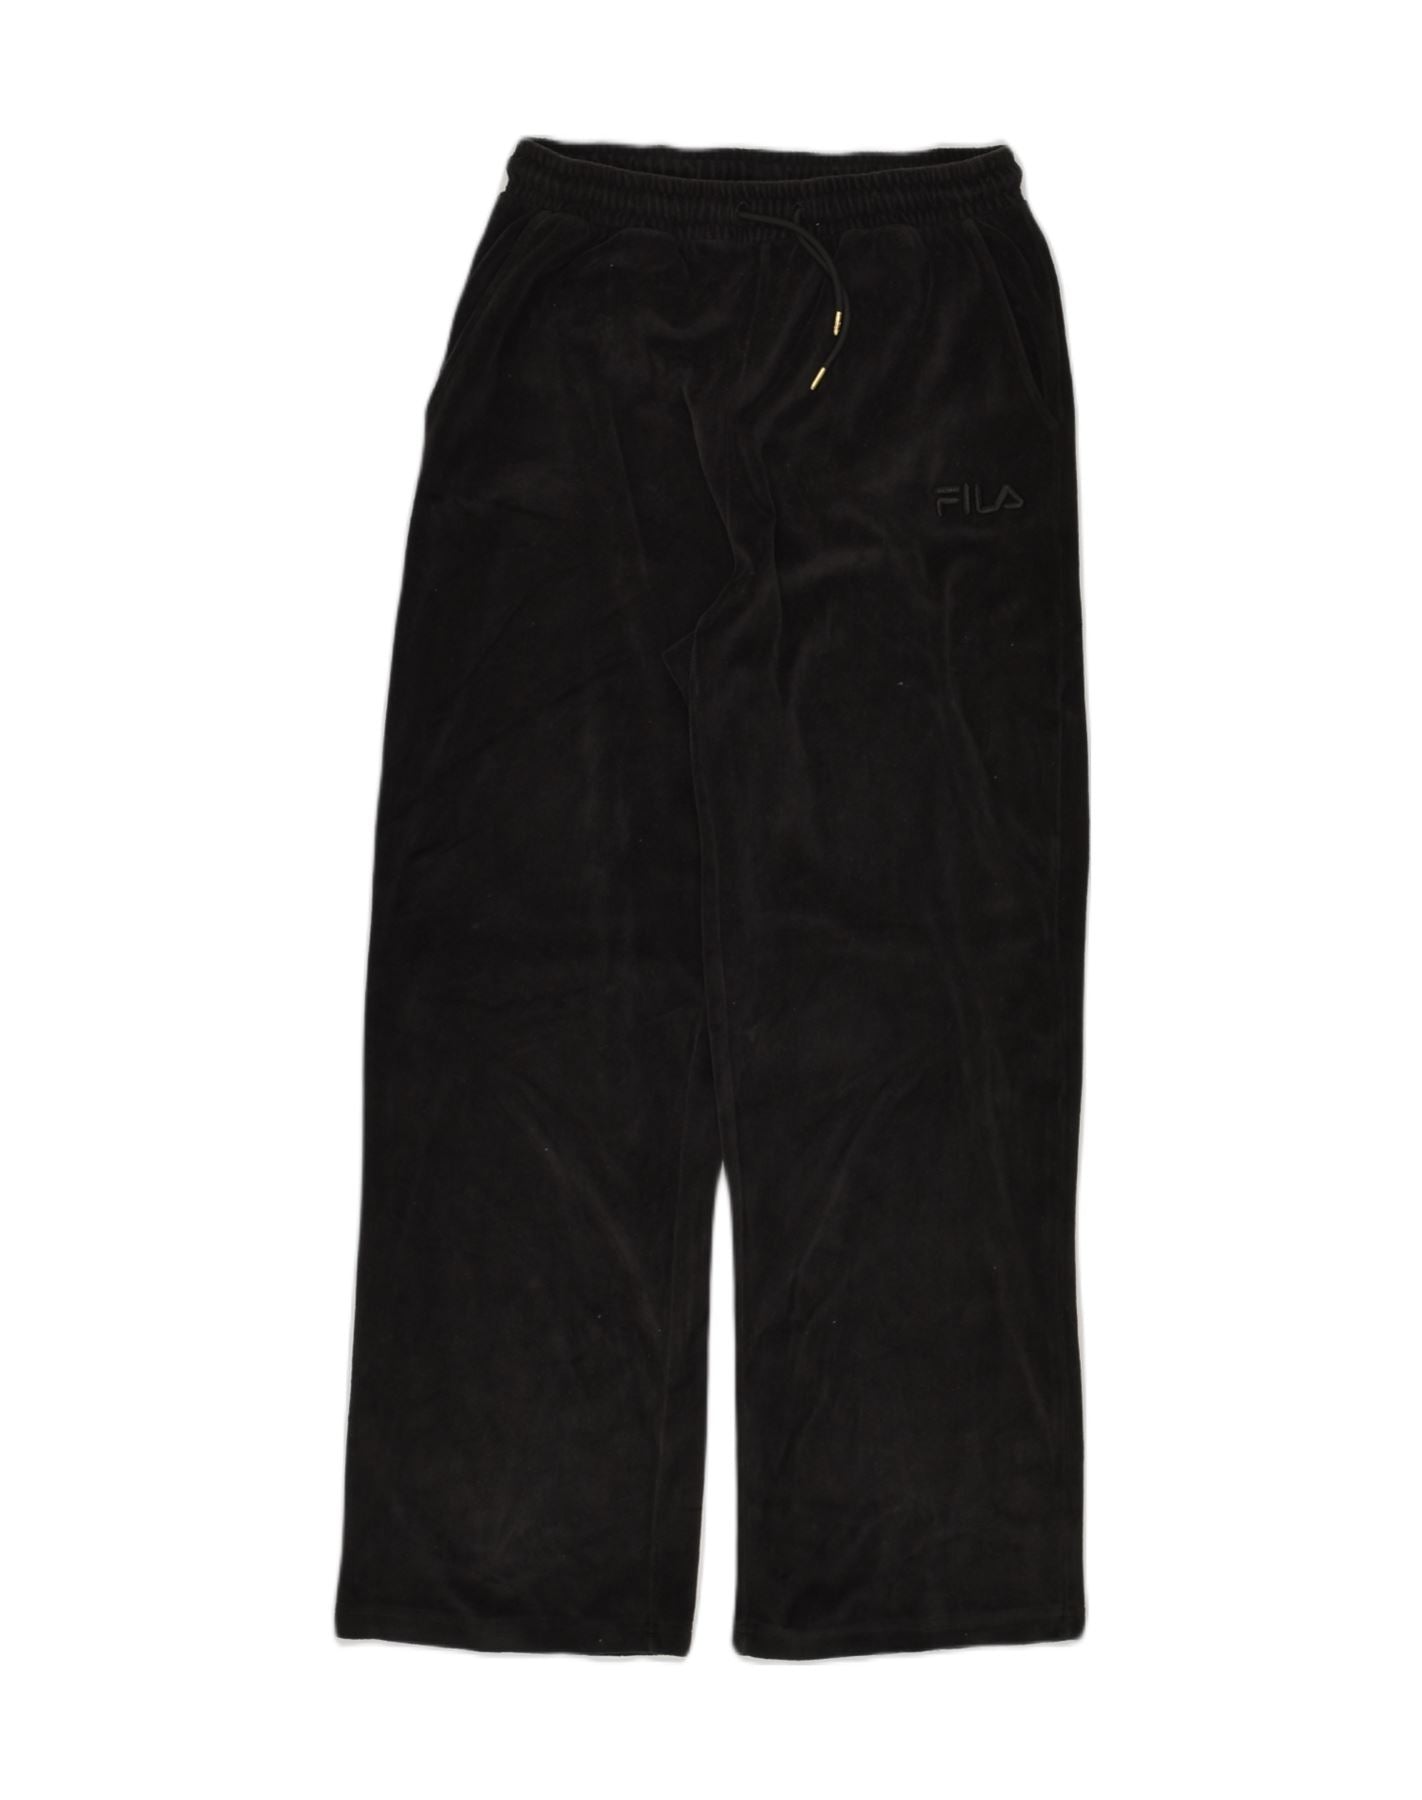 FILA Pantalones de chándal para mujer UK 6 XS Algodón negro